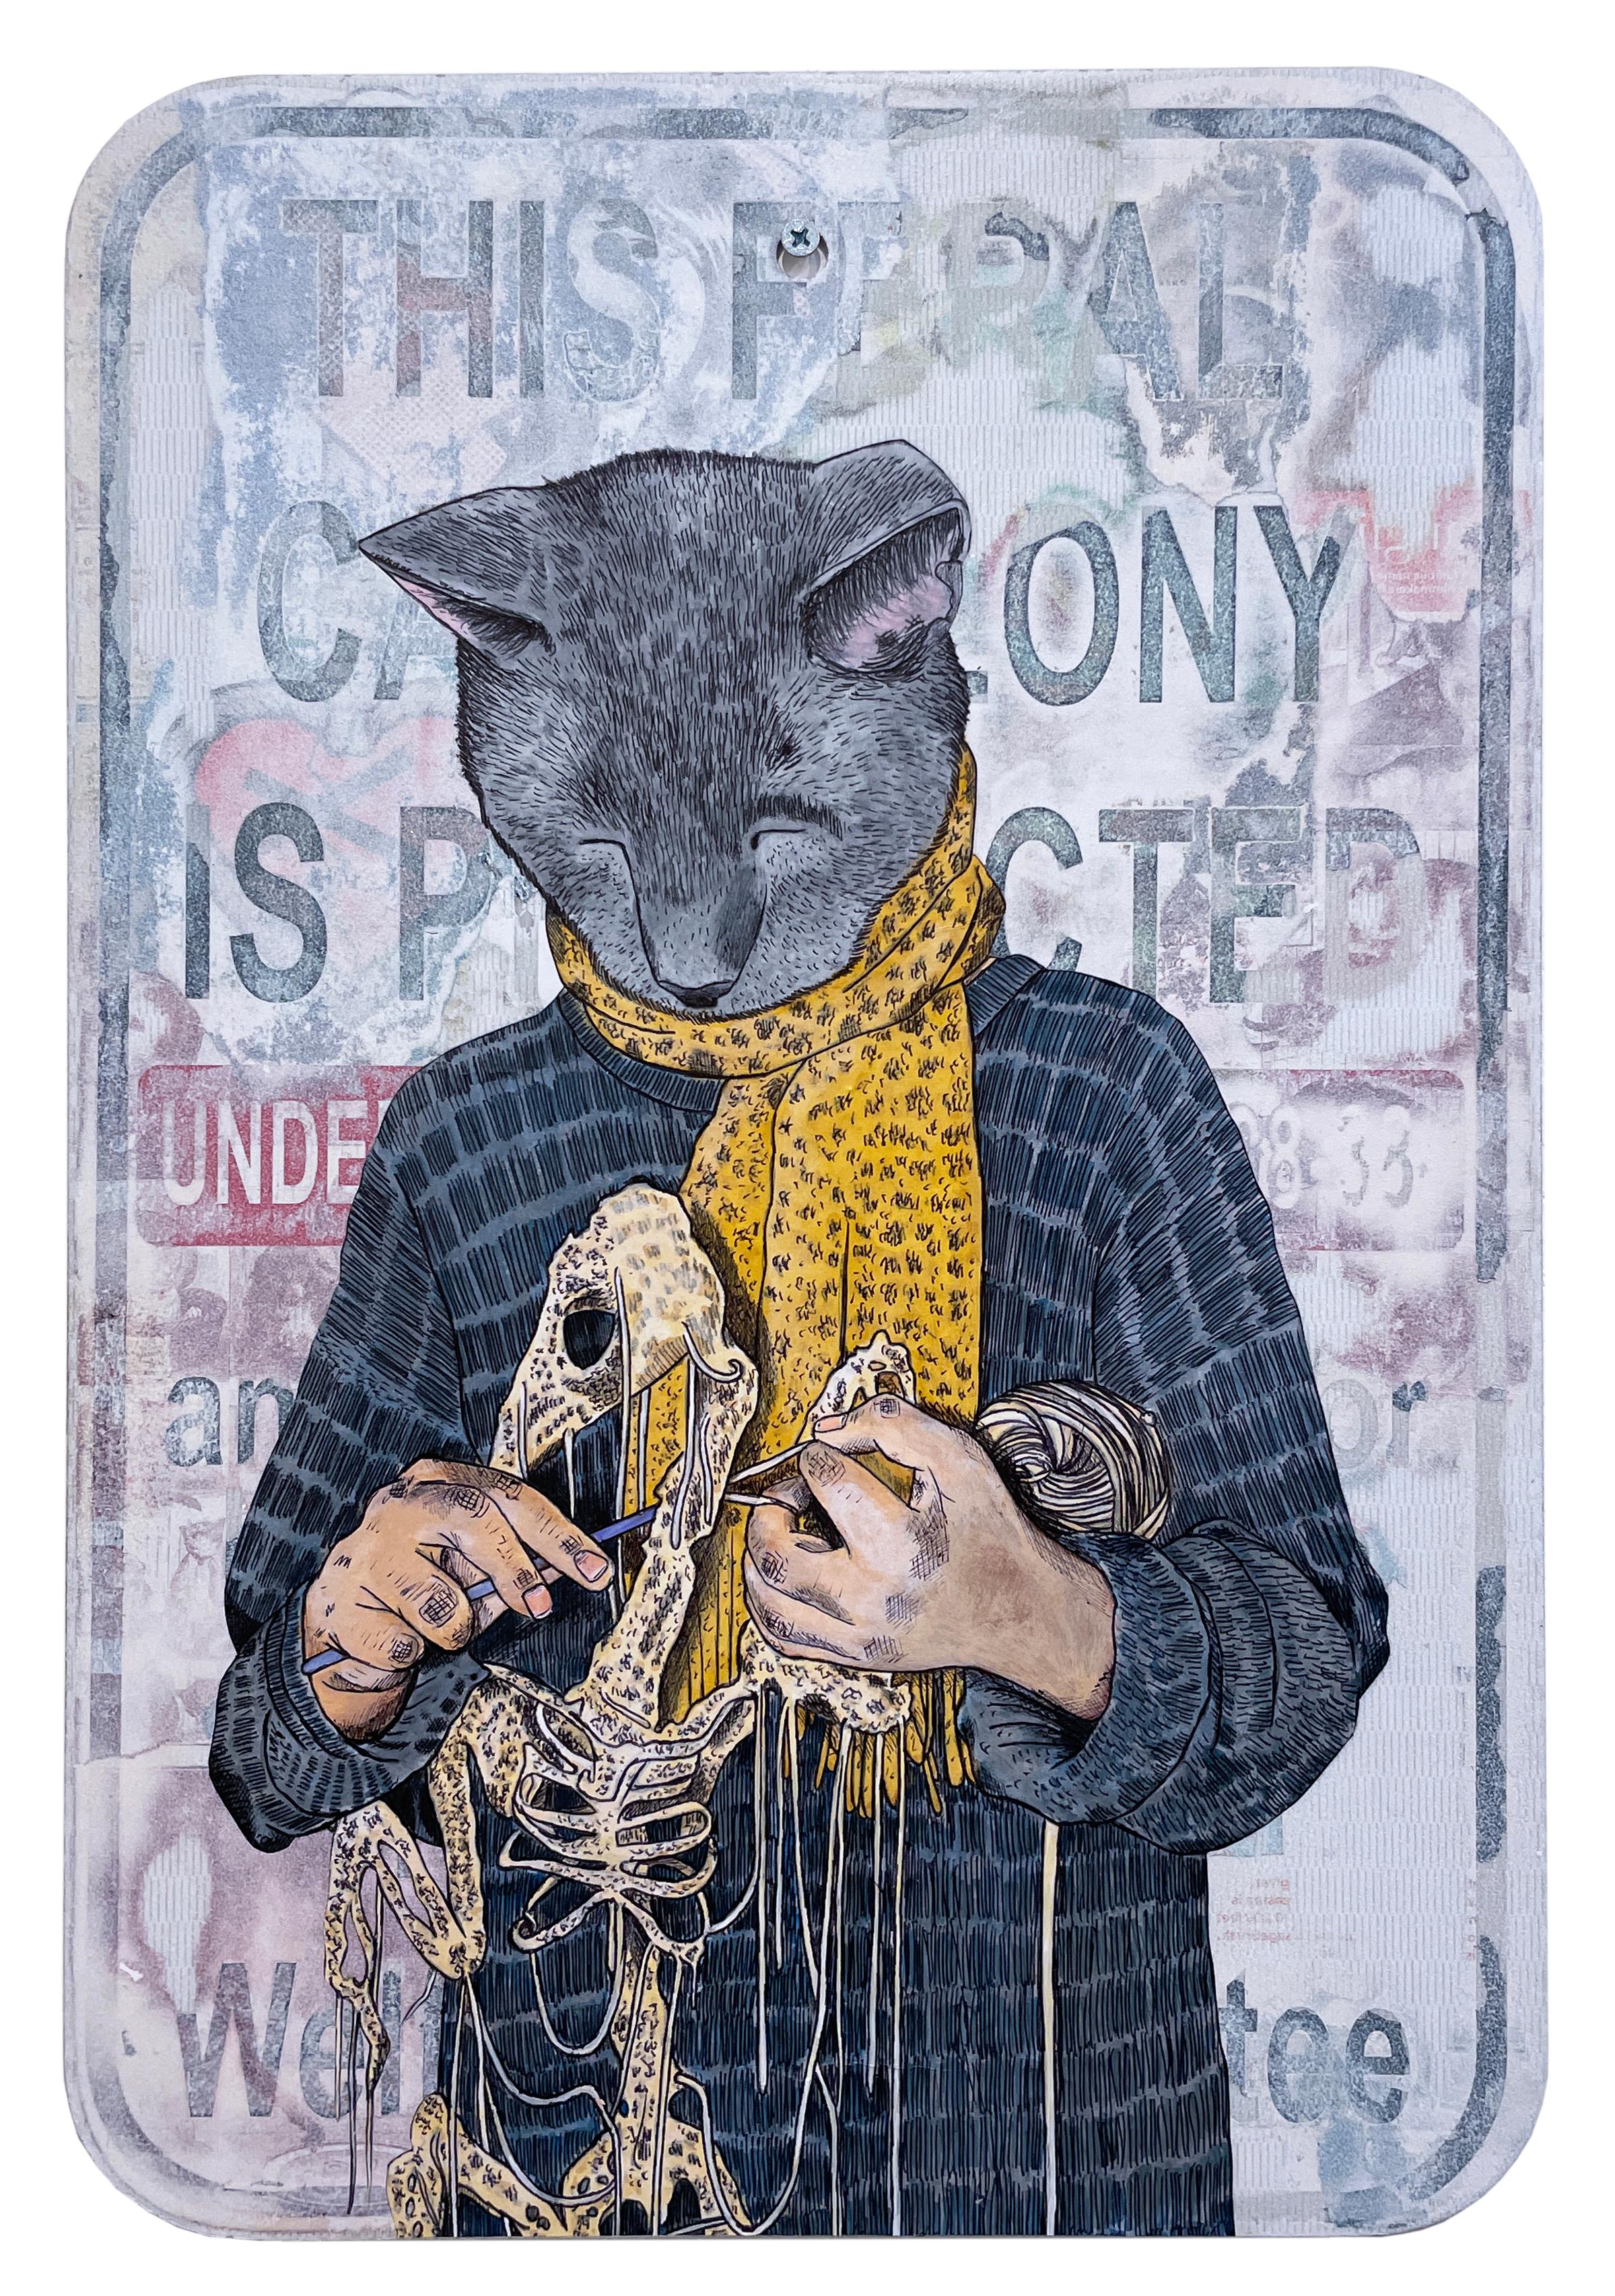 Sean 9 Lugo Figurative Painting - Cat Colony, 2023, graffiti mixed media street sign, knitting cat portrait